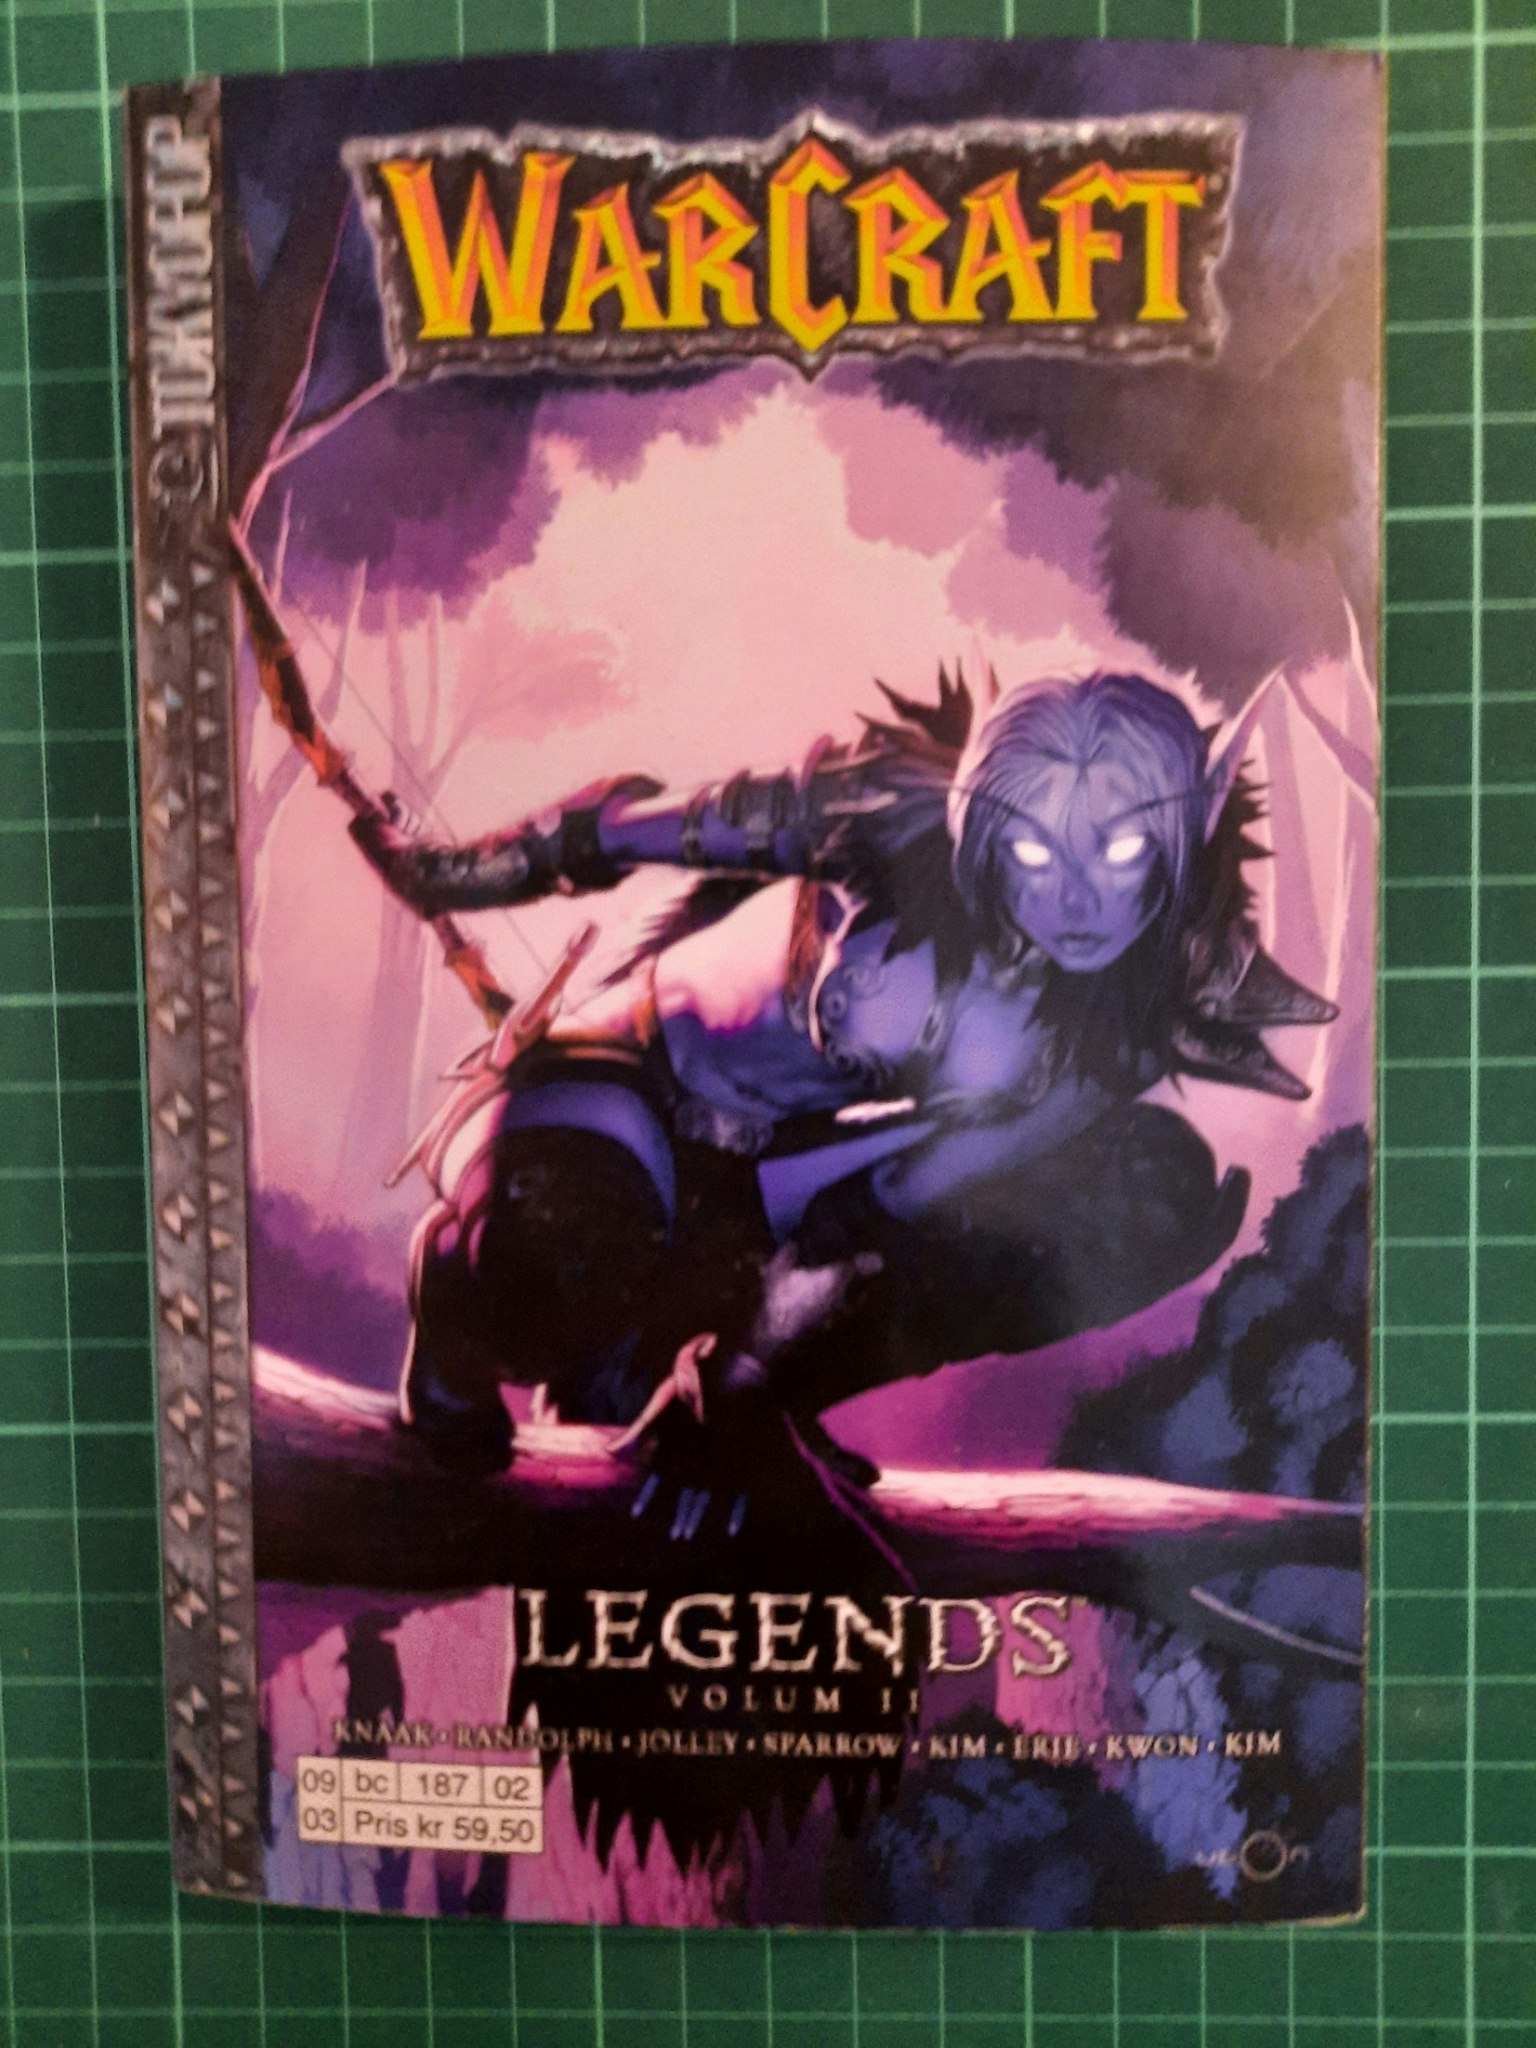 Warcraft legends 2